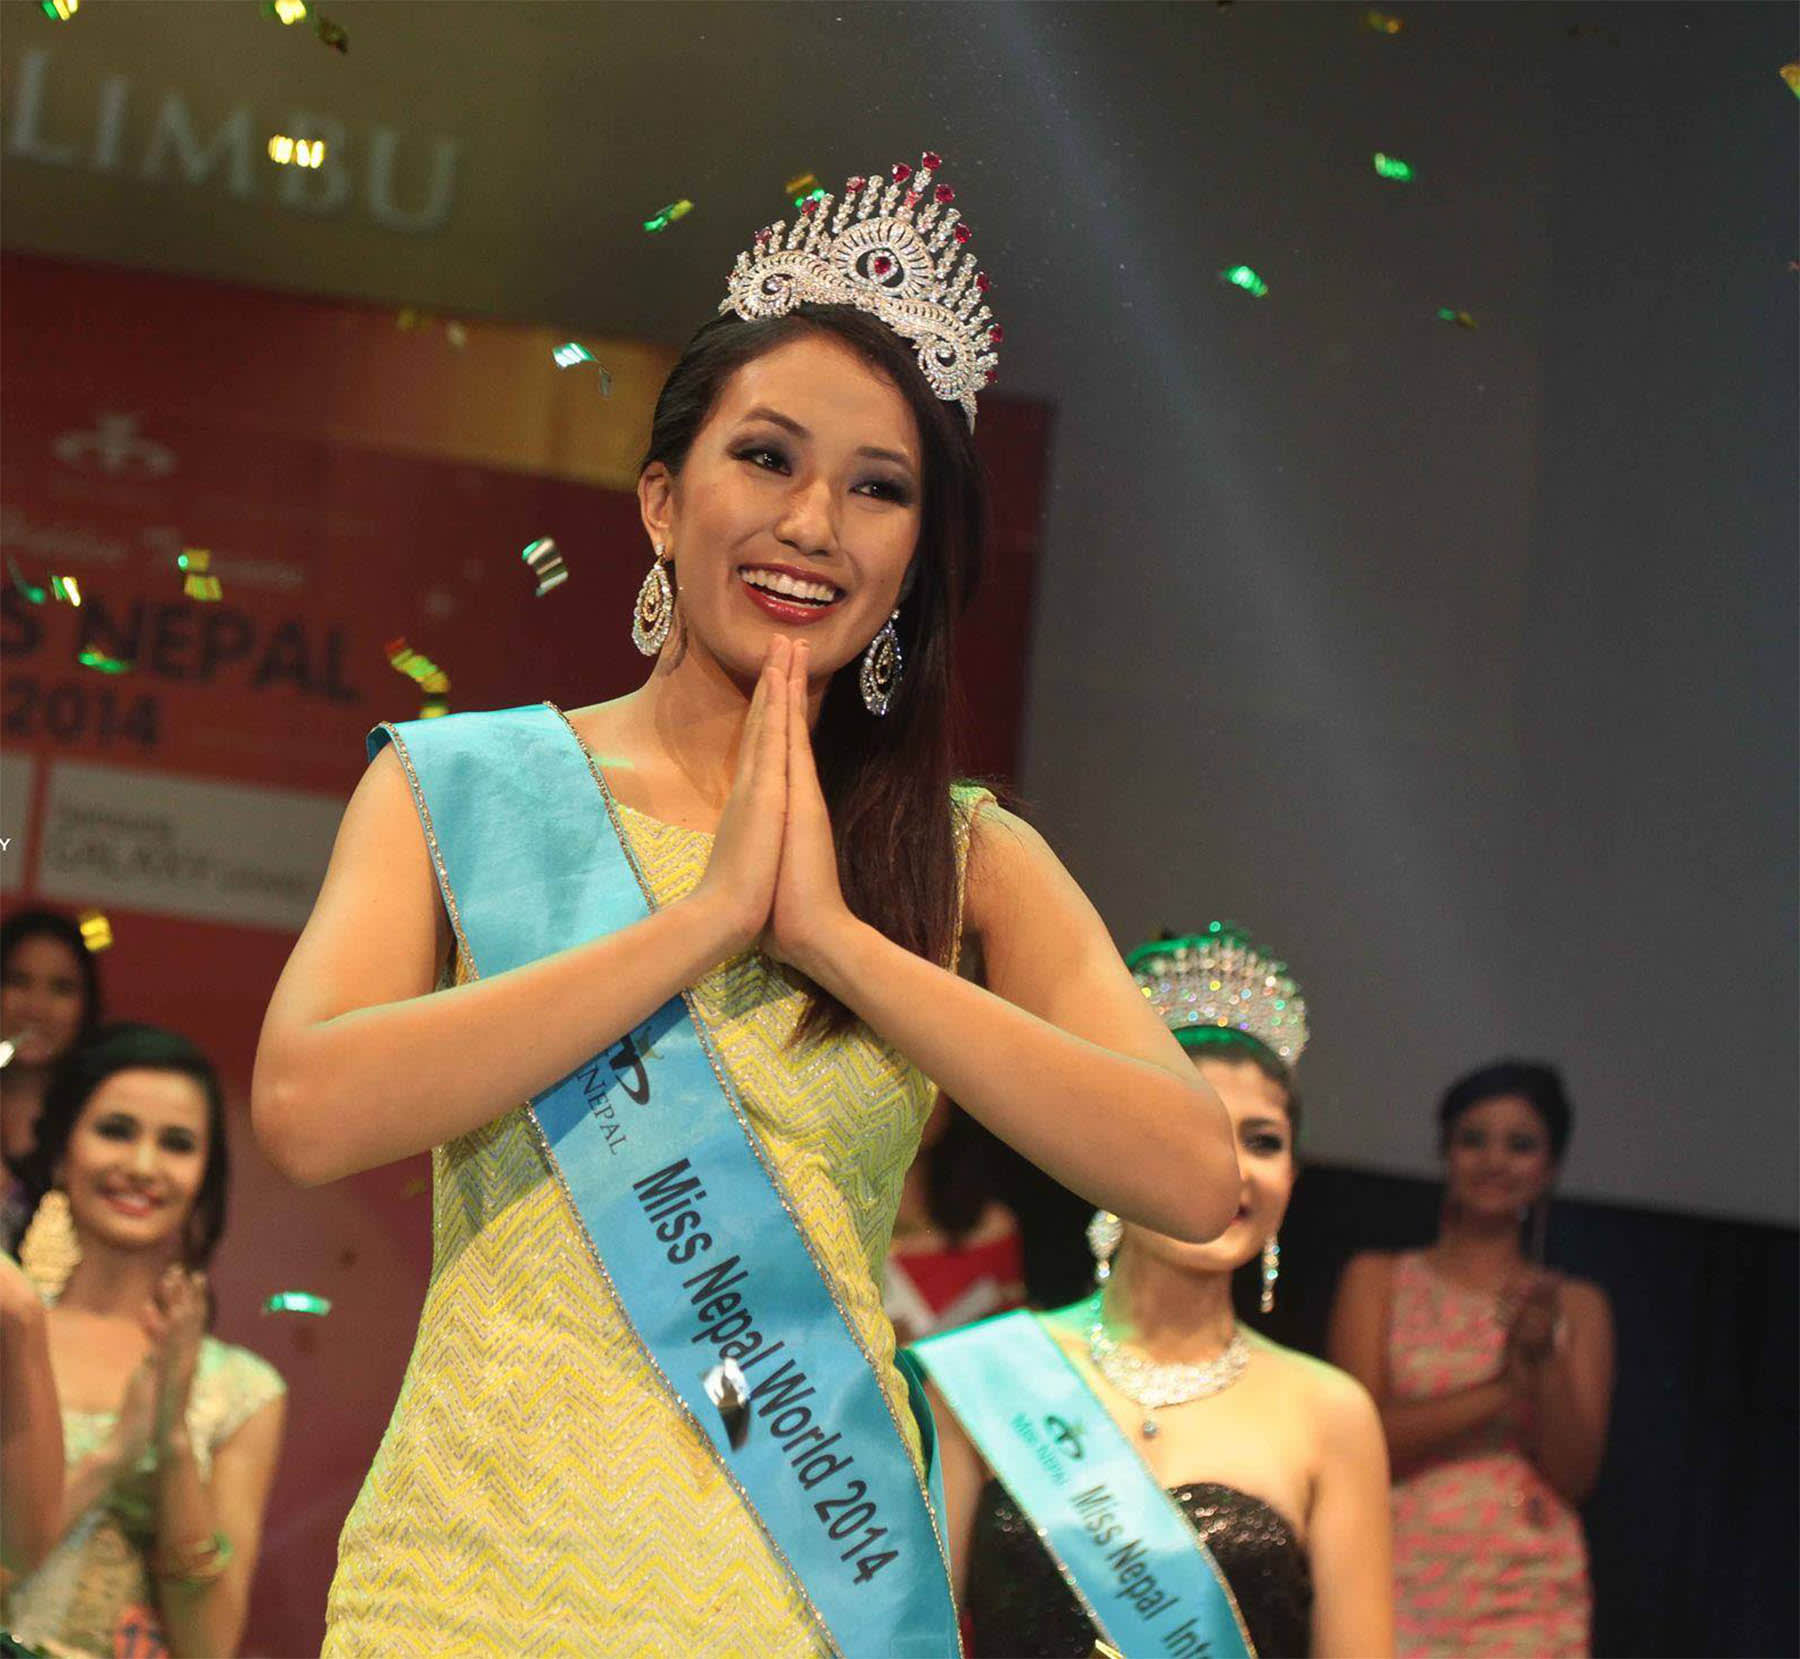 Subin Limbu Namste Miss Nepal